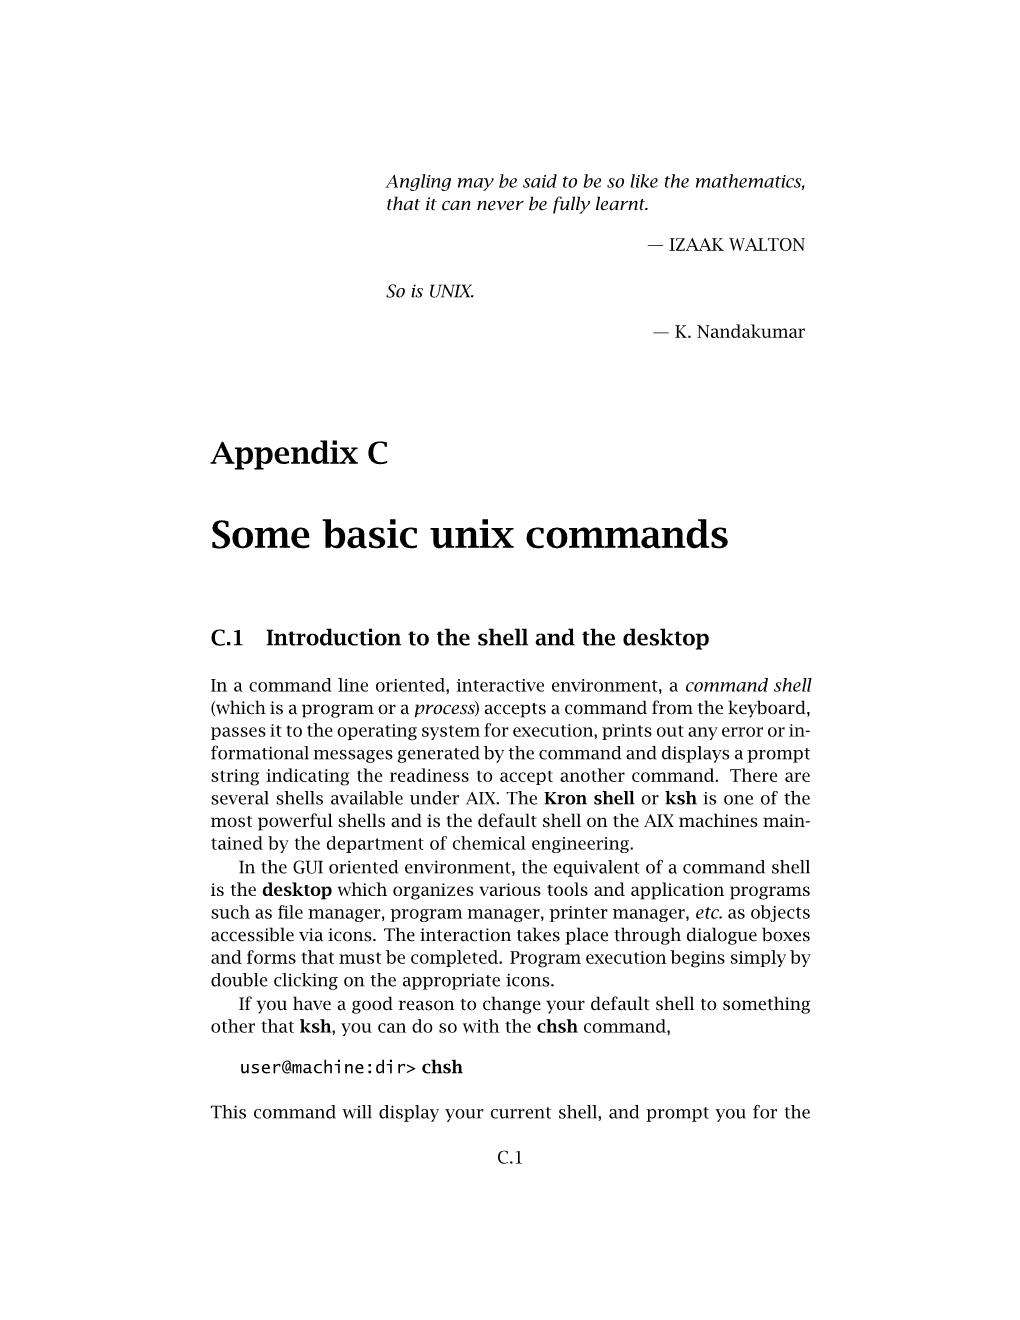 Some Basic Unix Commands